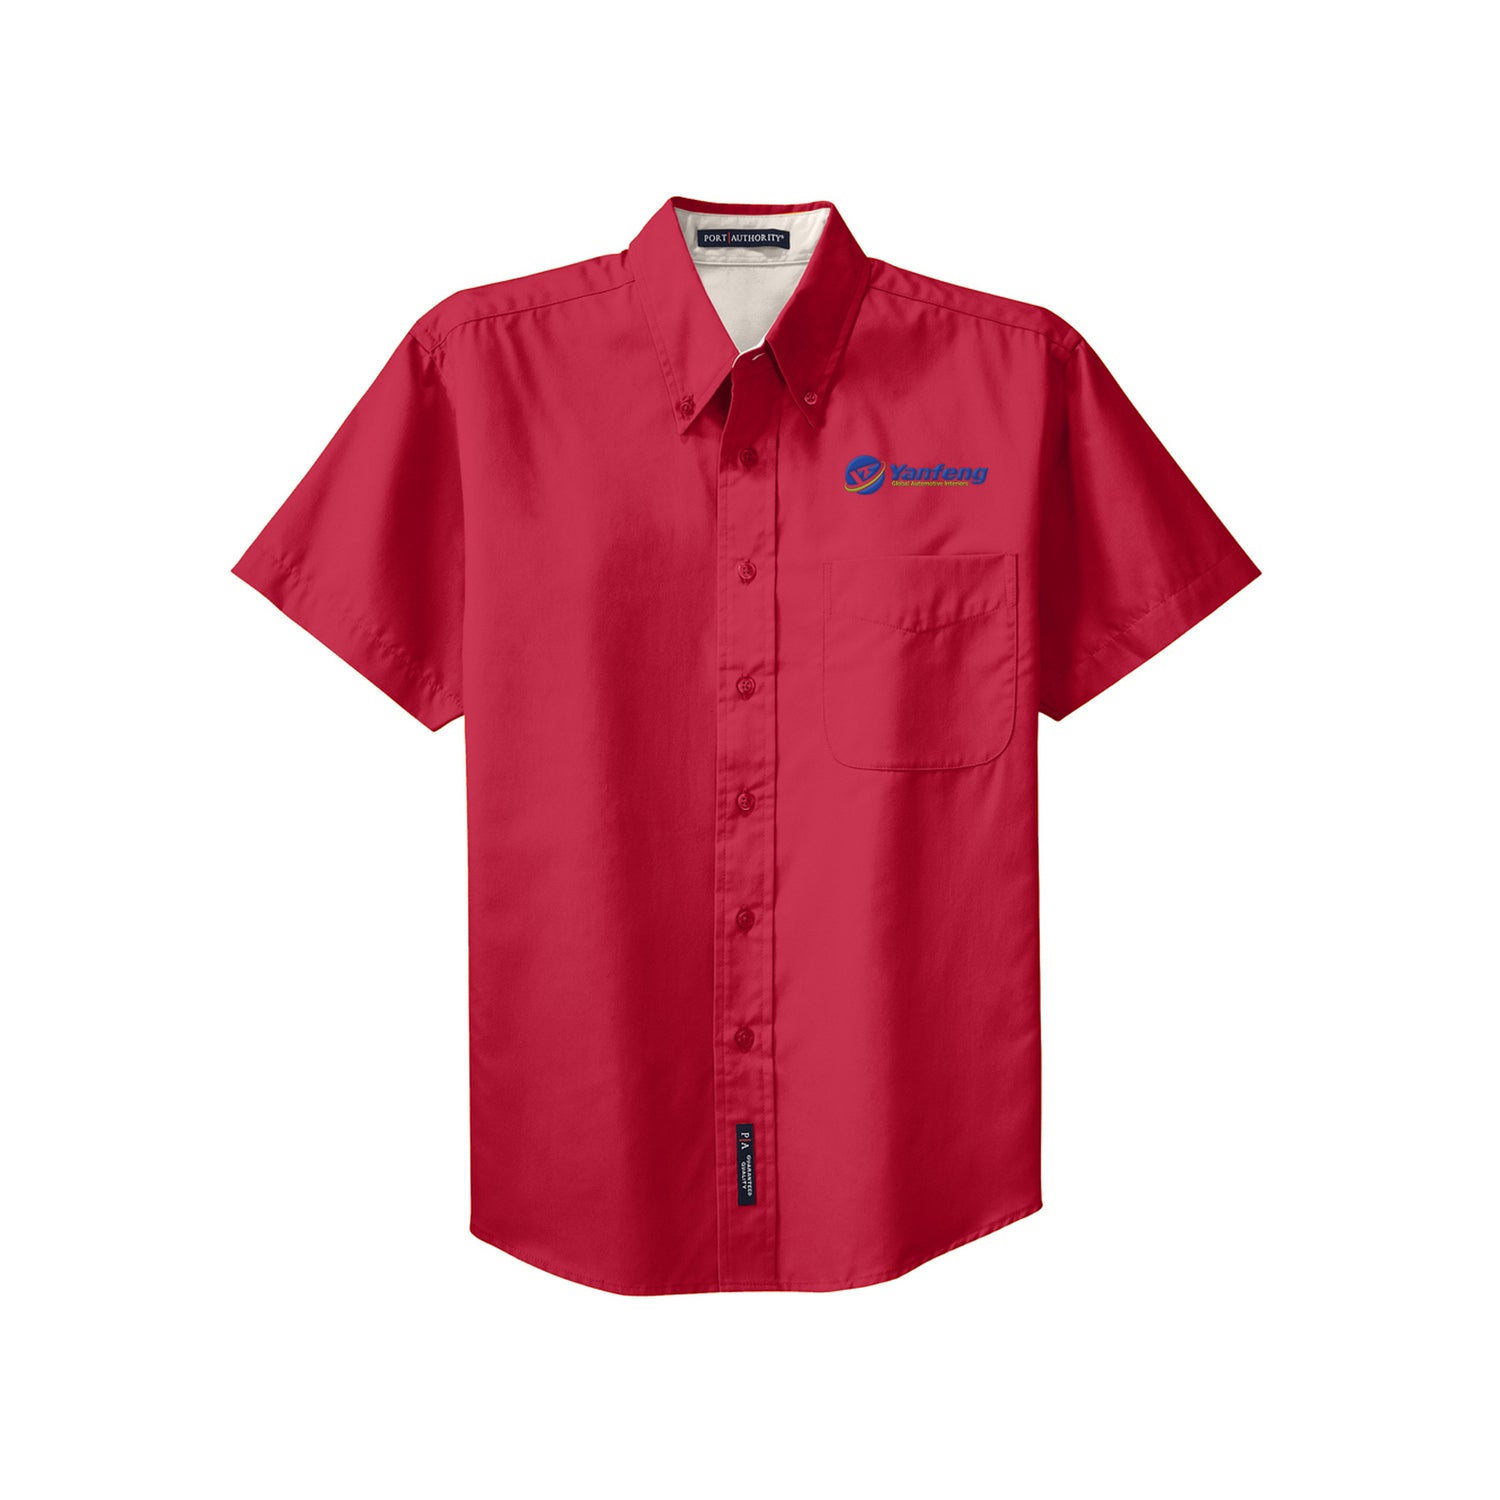 Yanfeng | Short Sleeve Easy Care Shirt